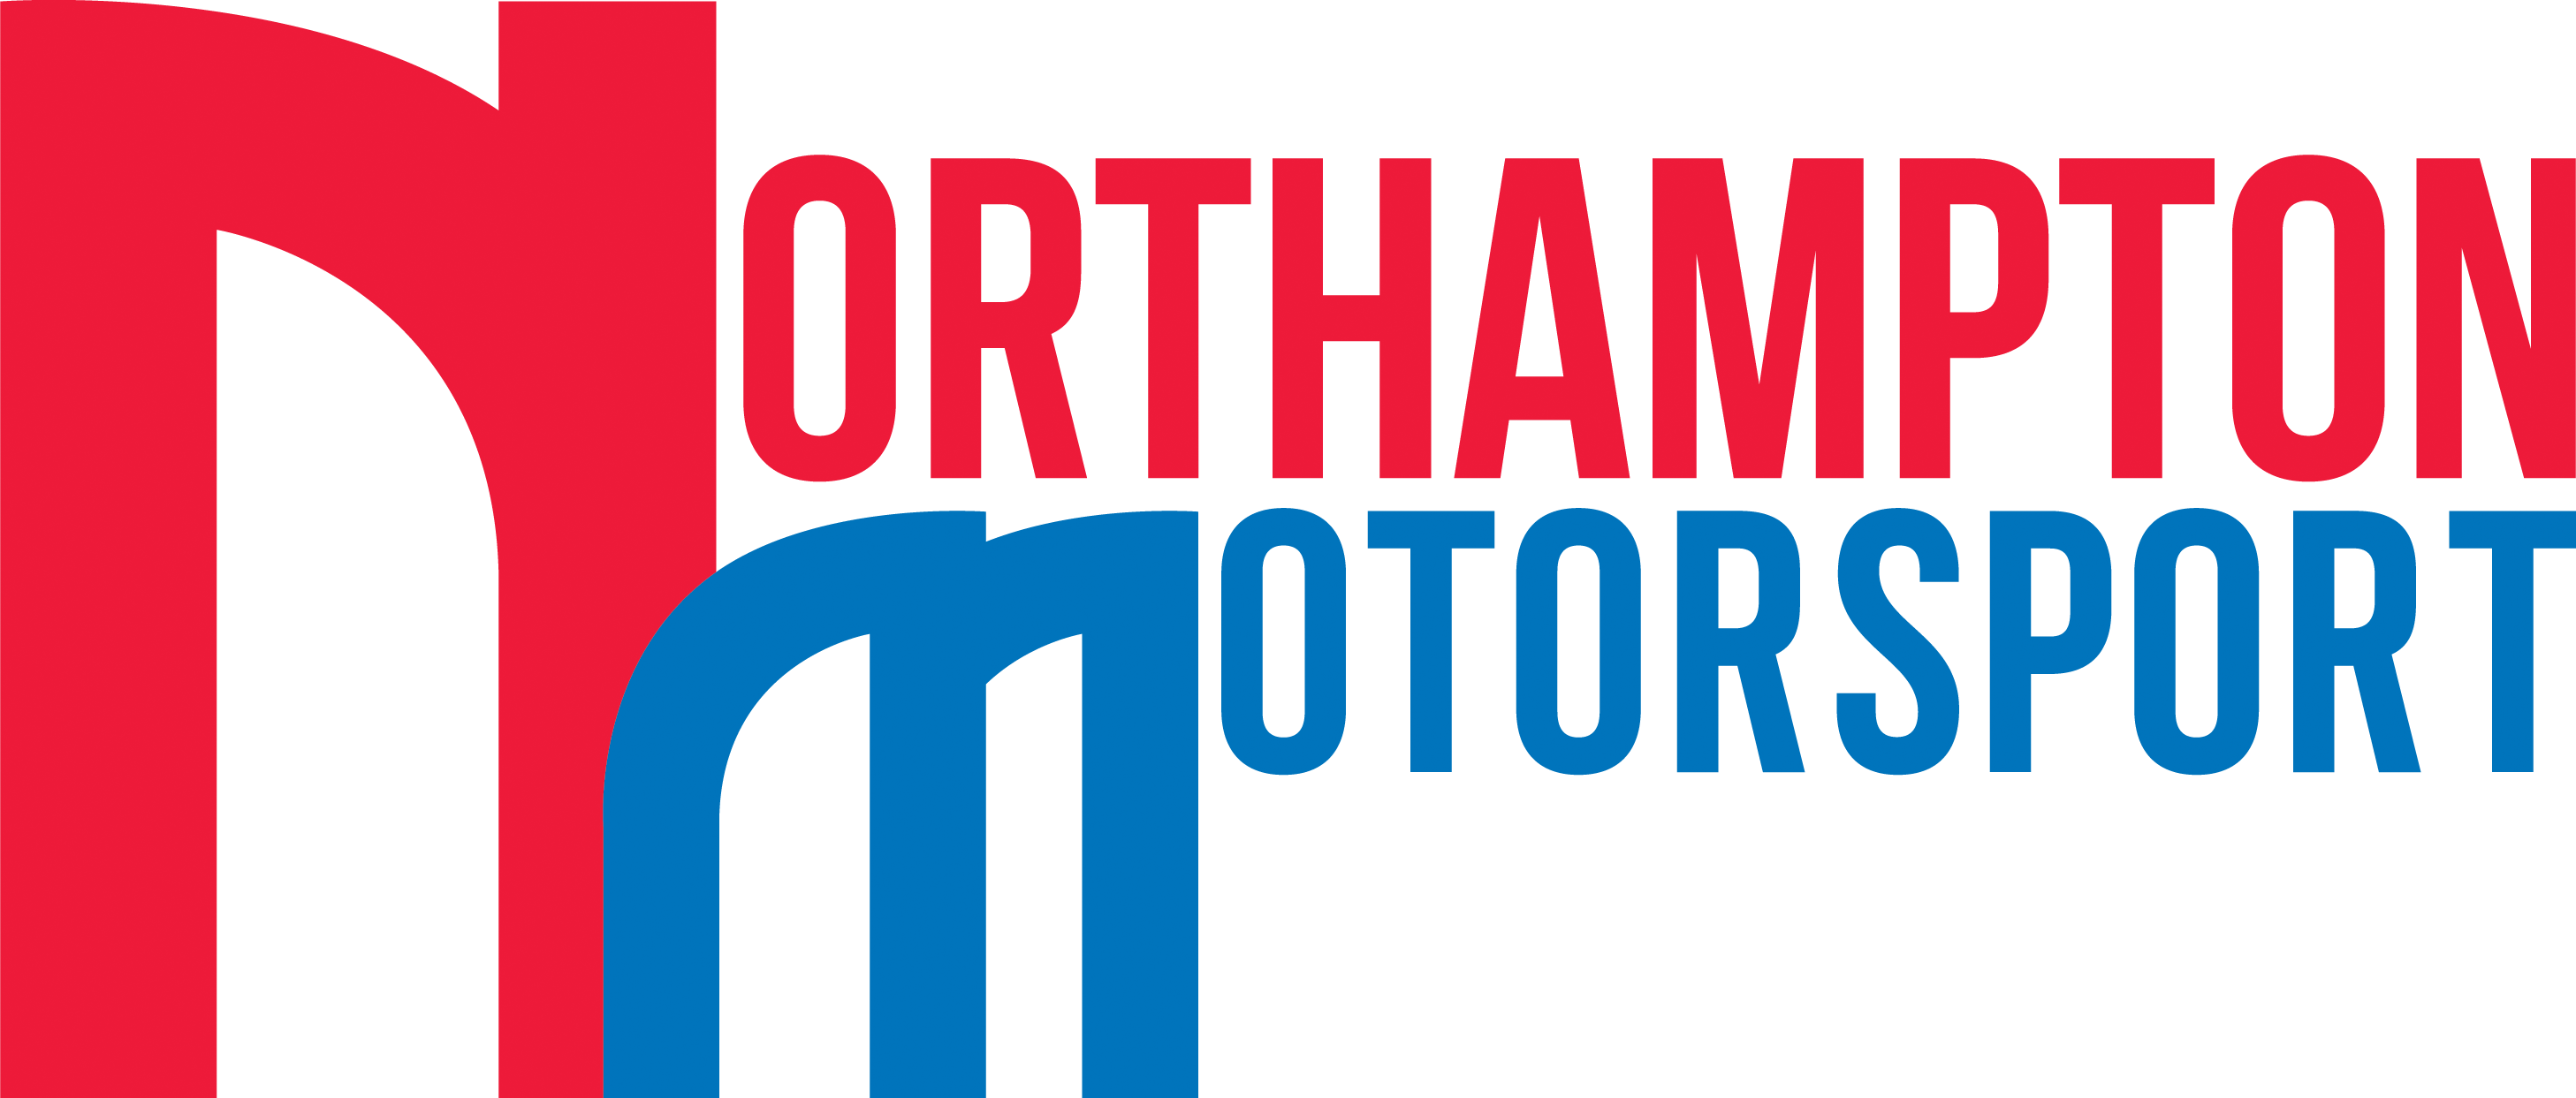 Northampton Motorsport